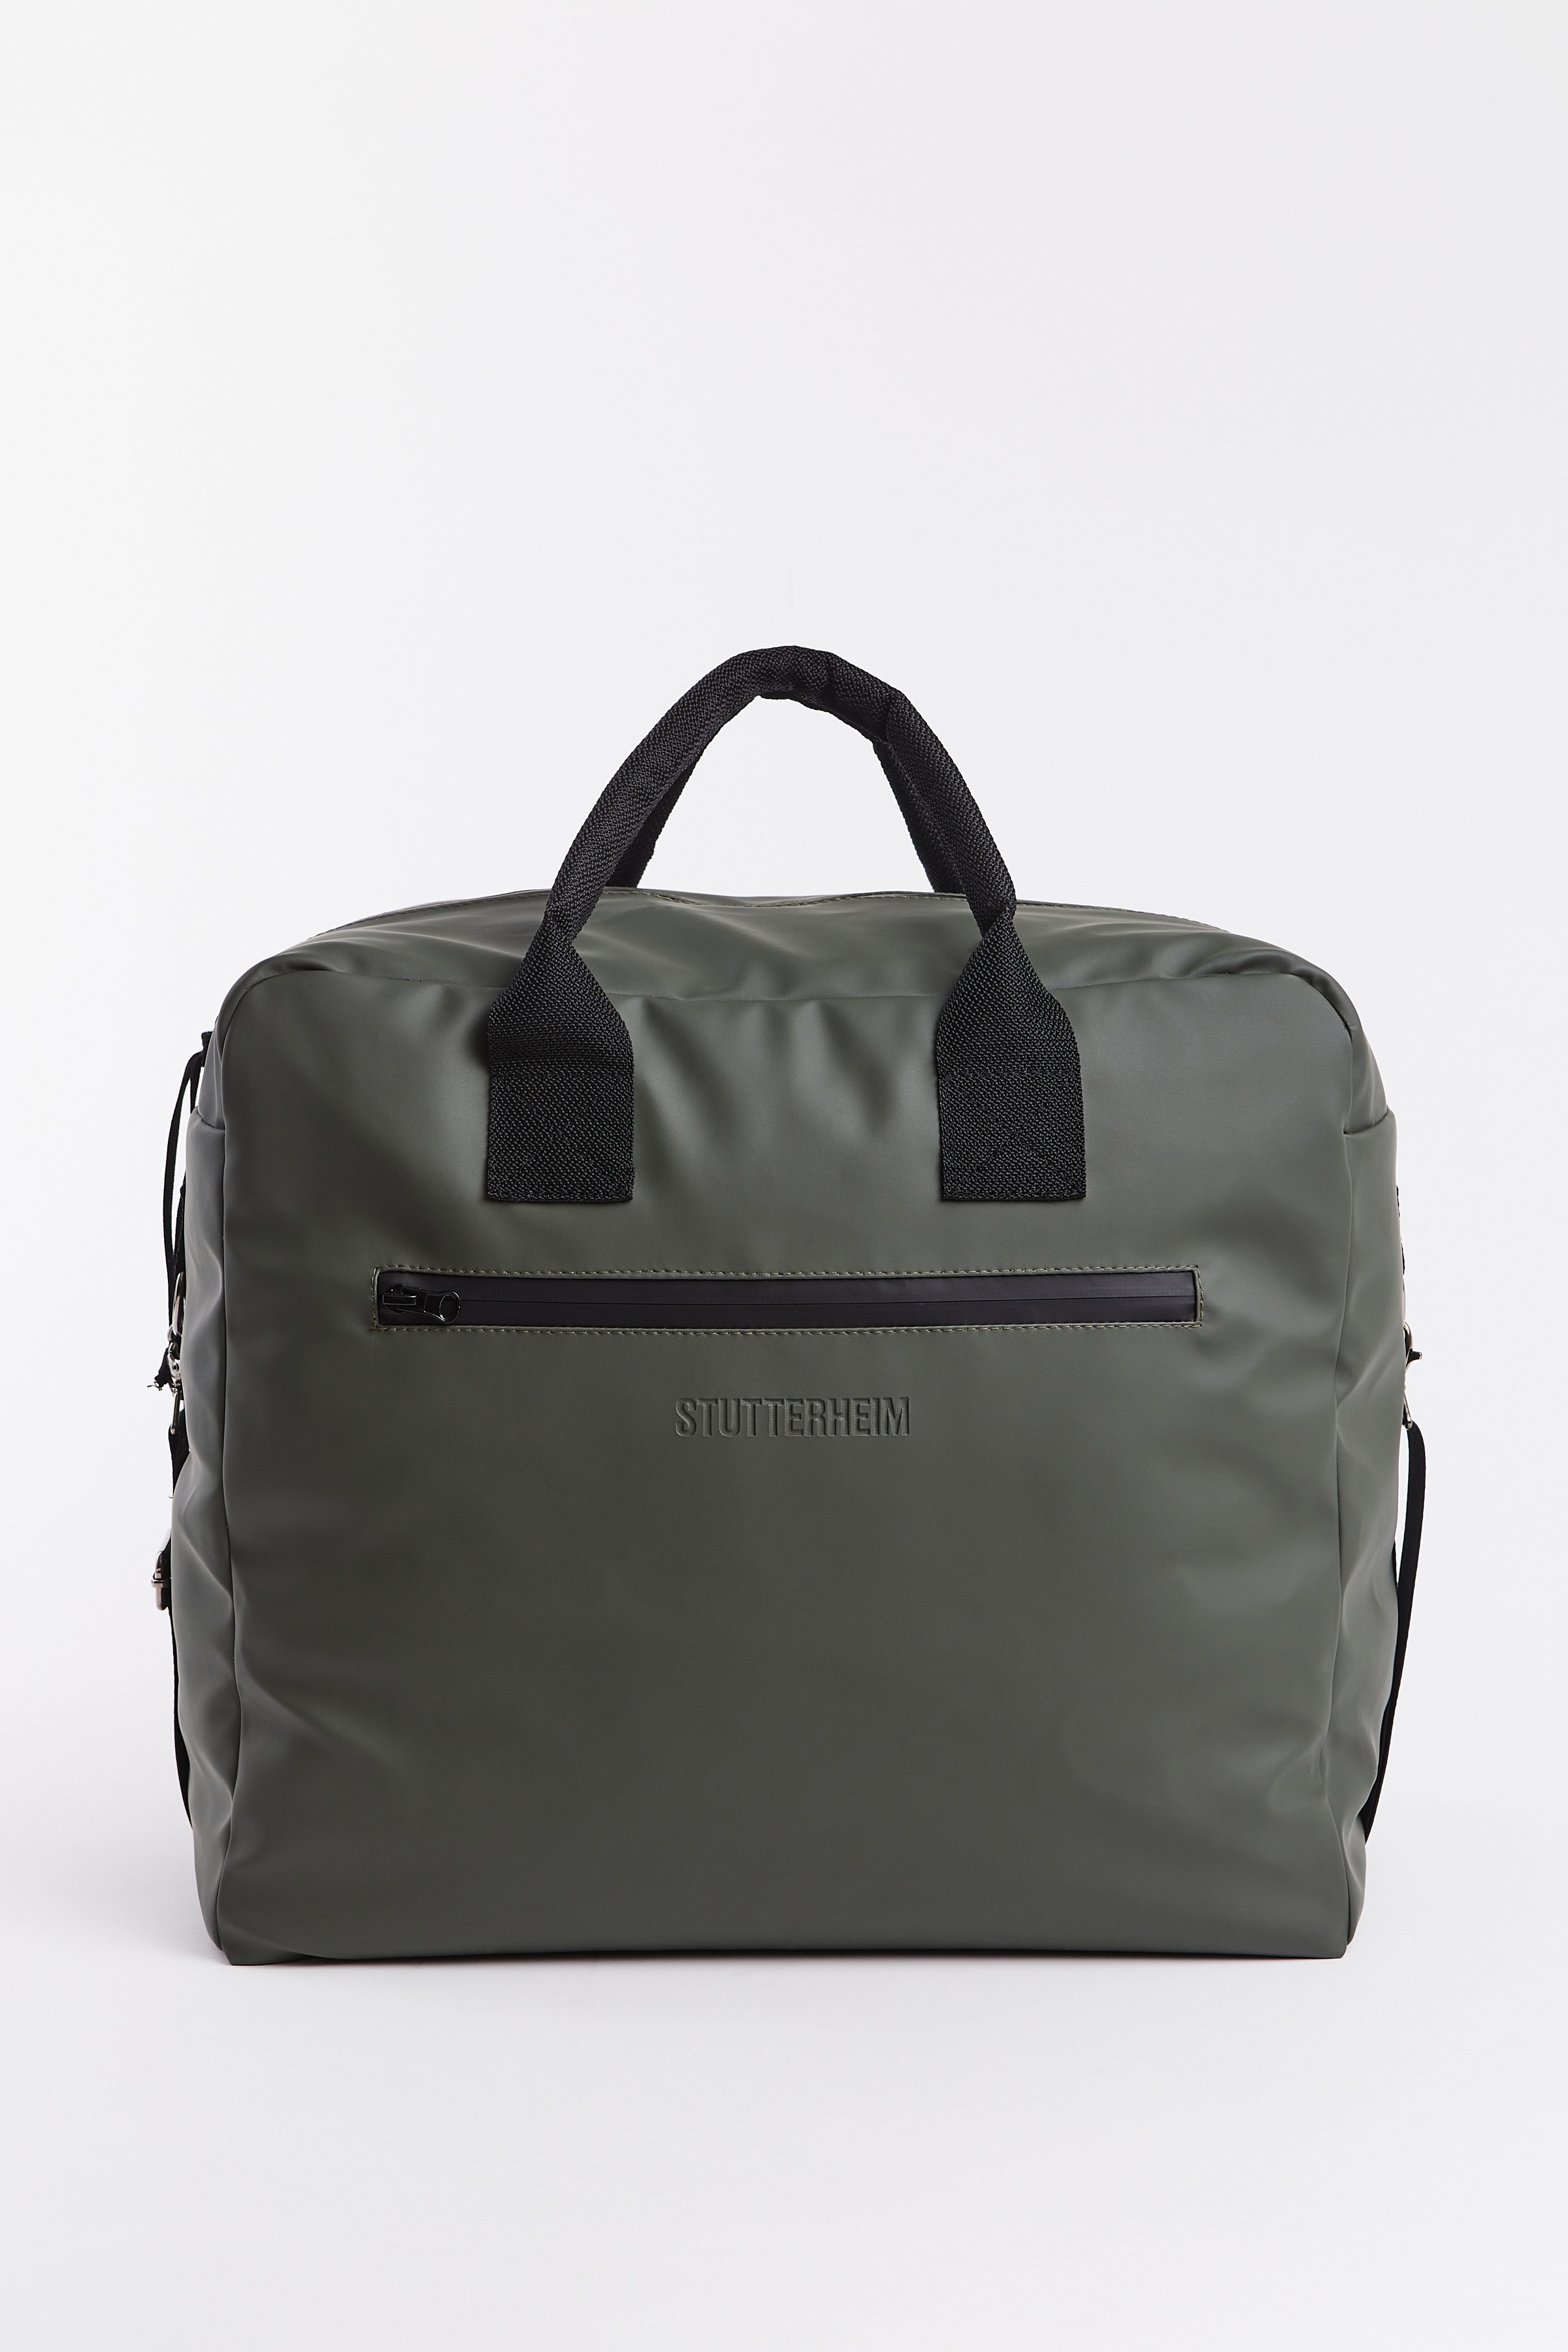 Svea Box Bag Green - 4